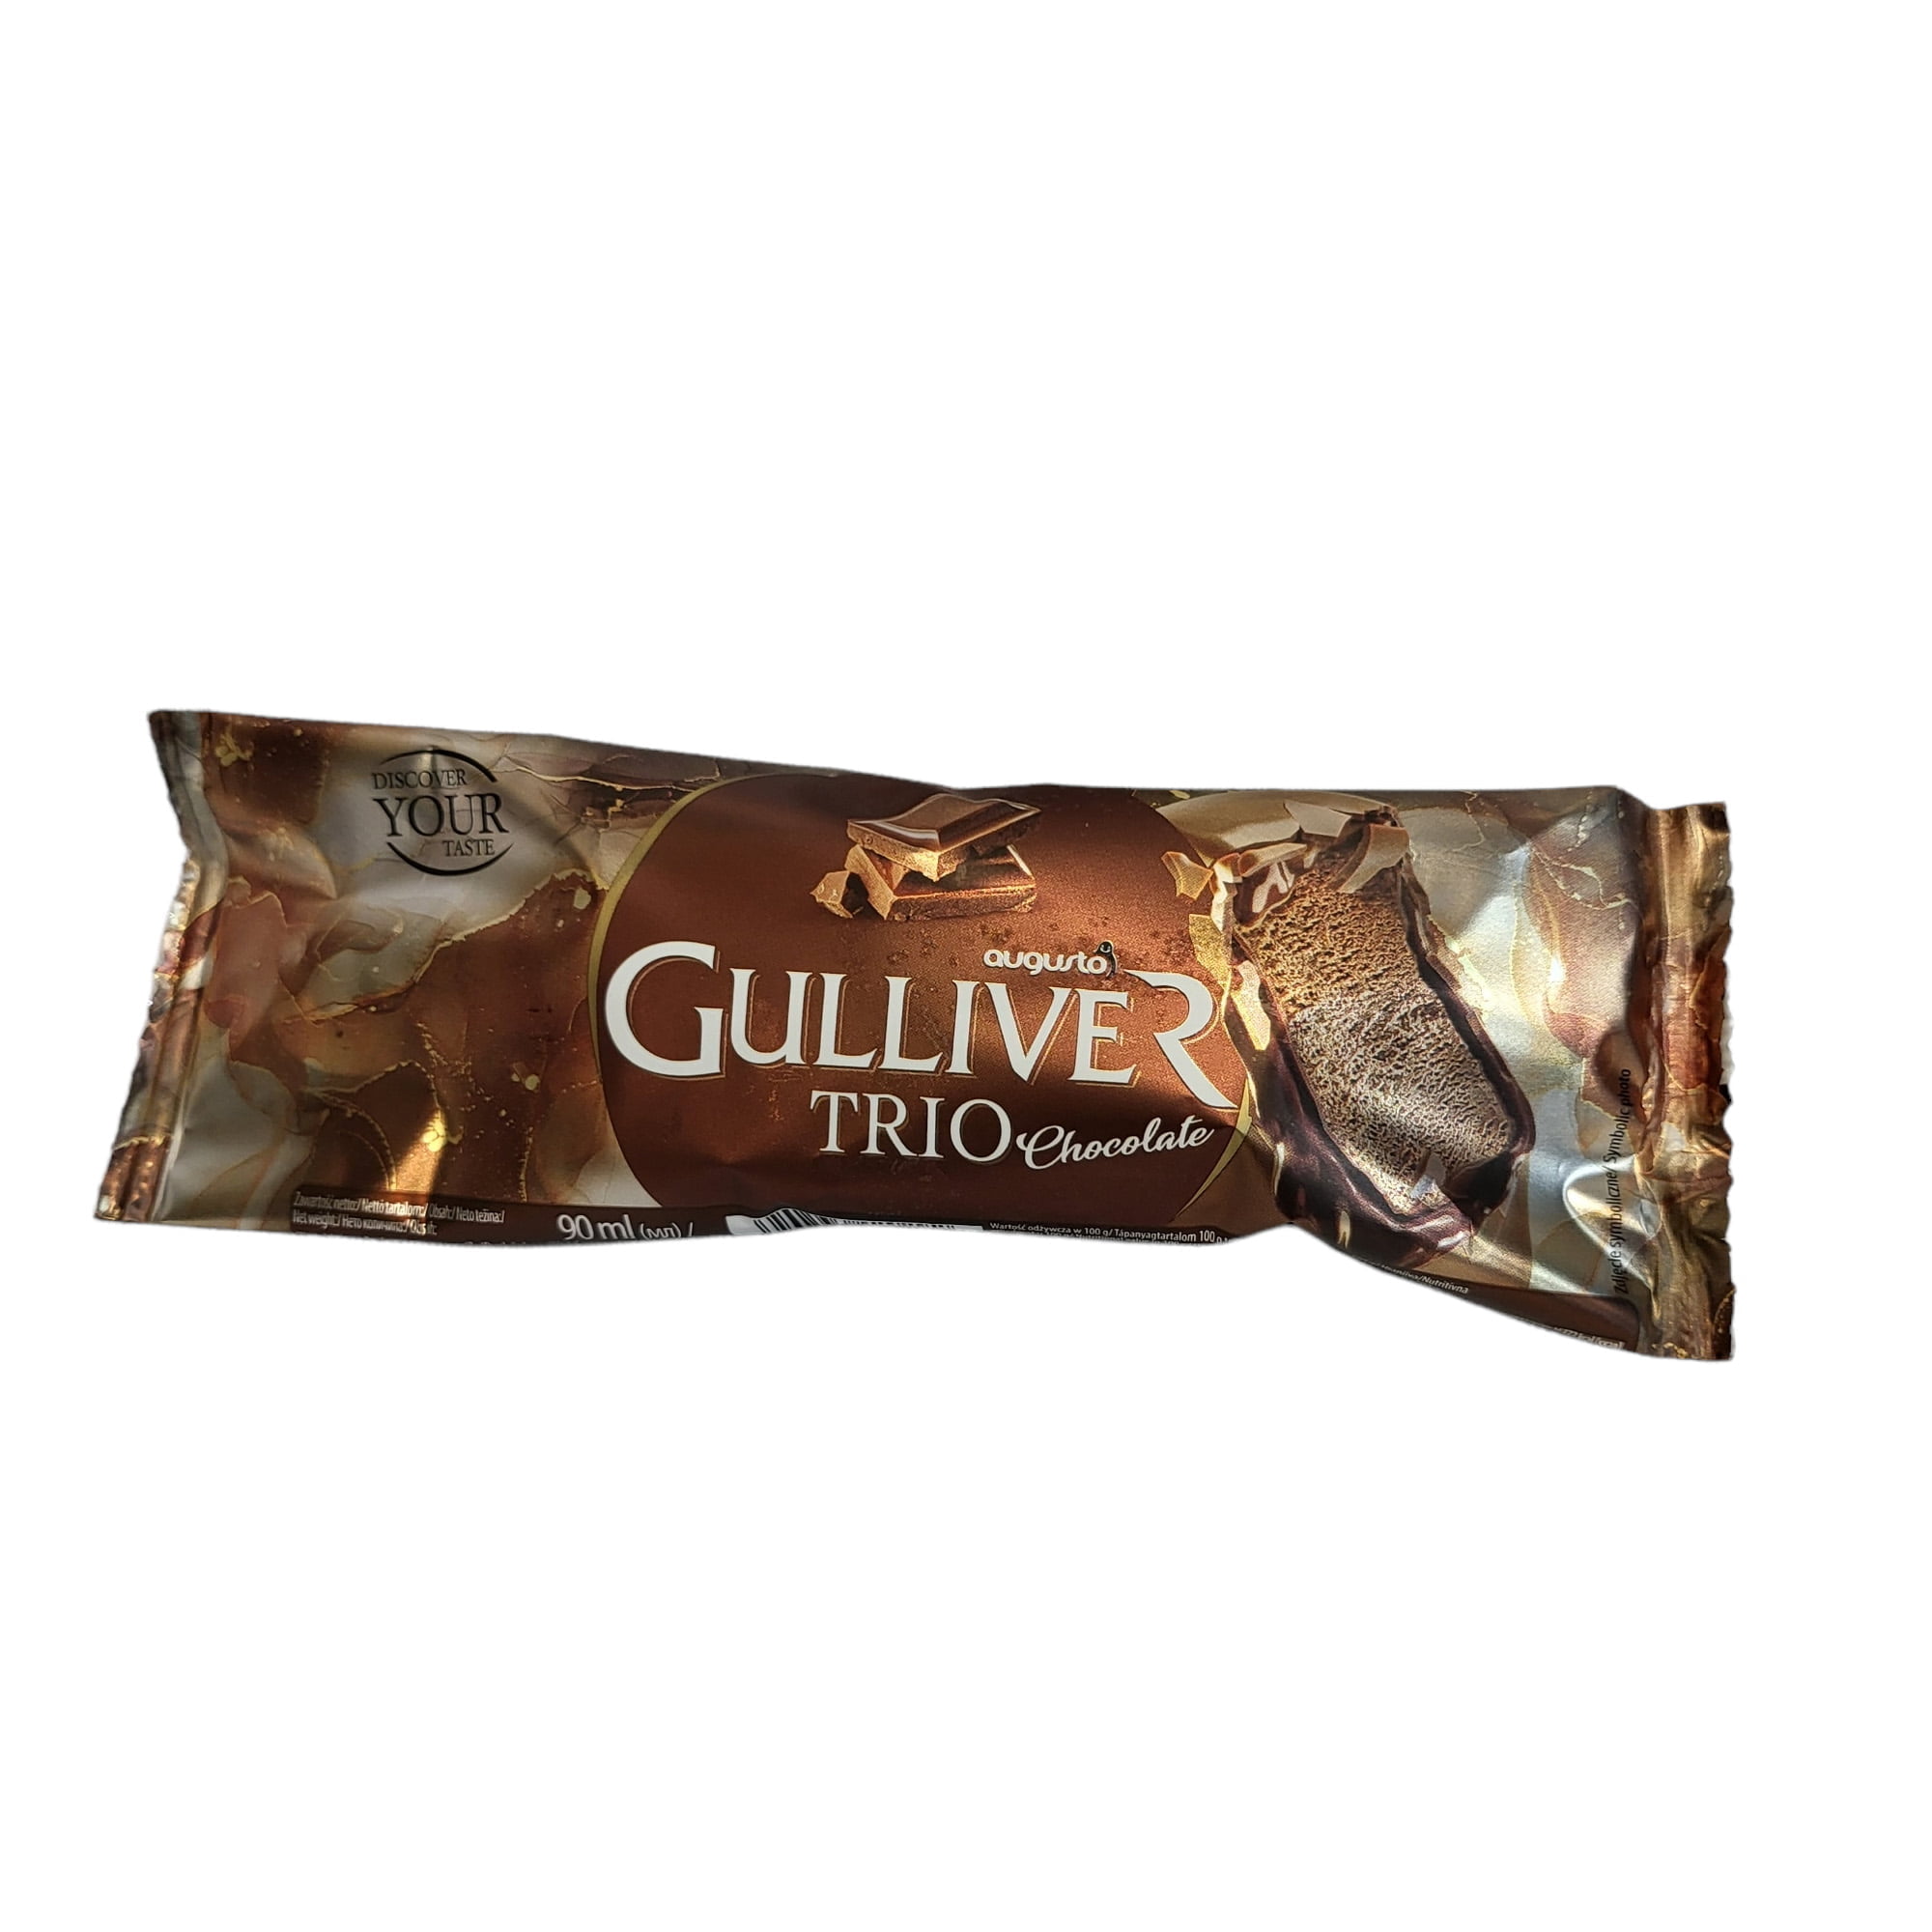 Gulliver Trio Chocolate